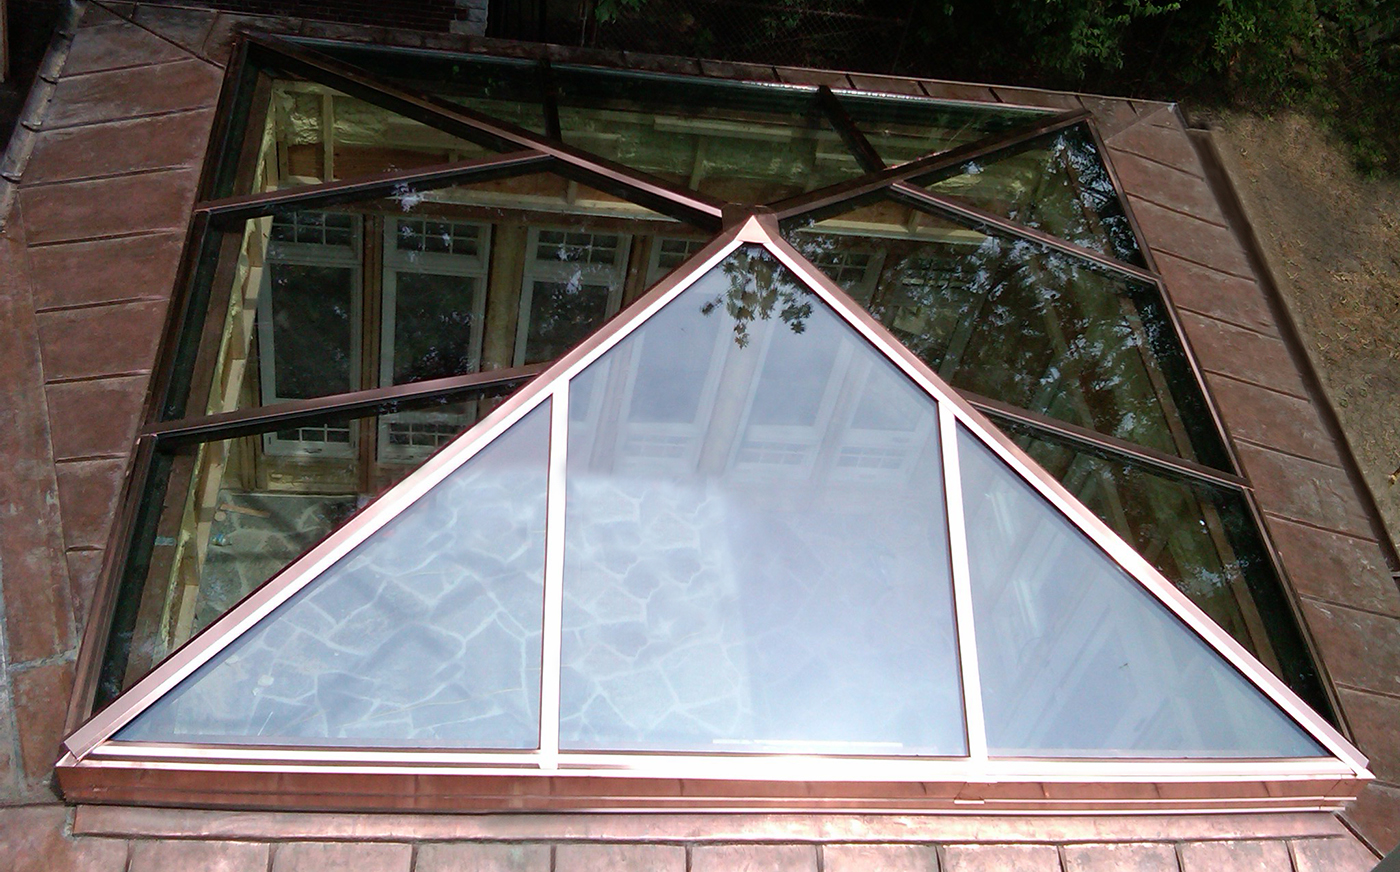 Copper clad pyramid skylight